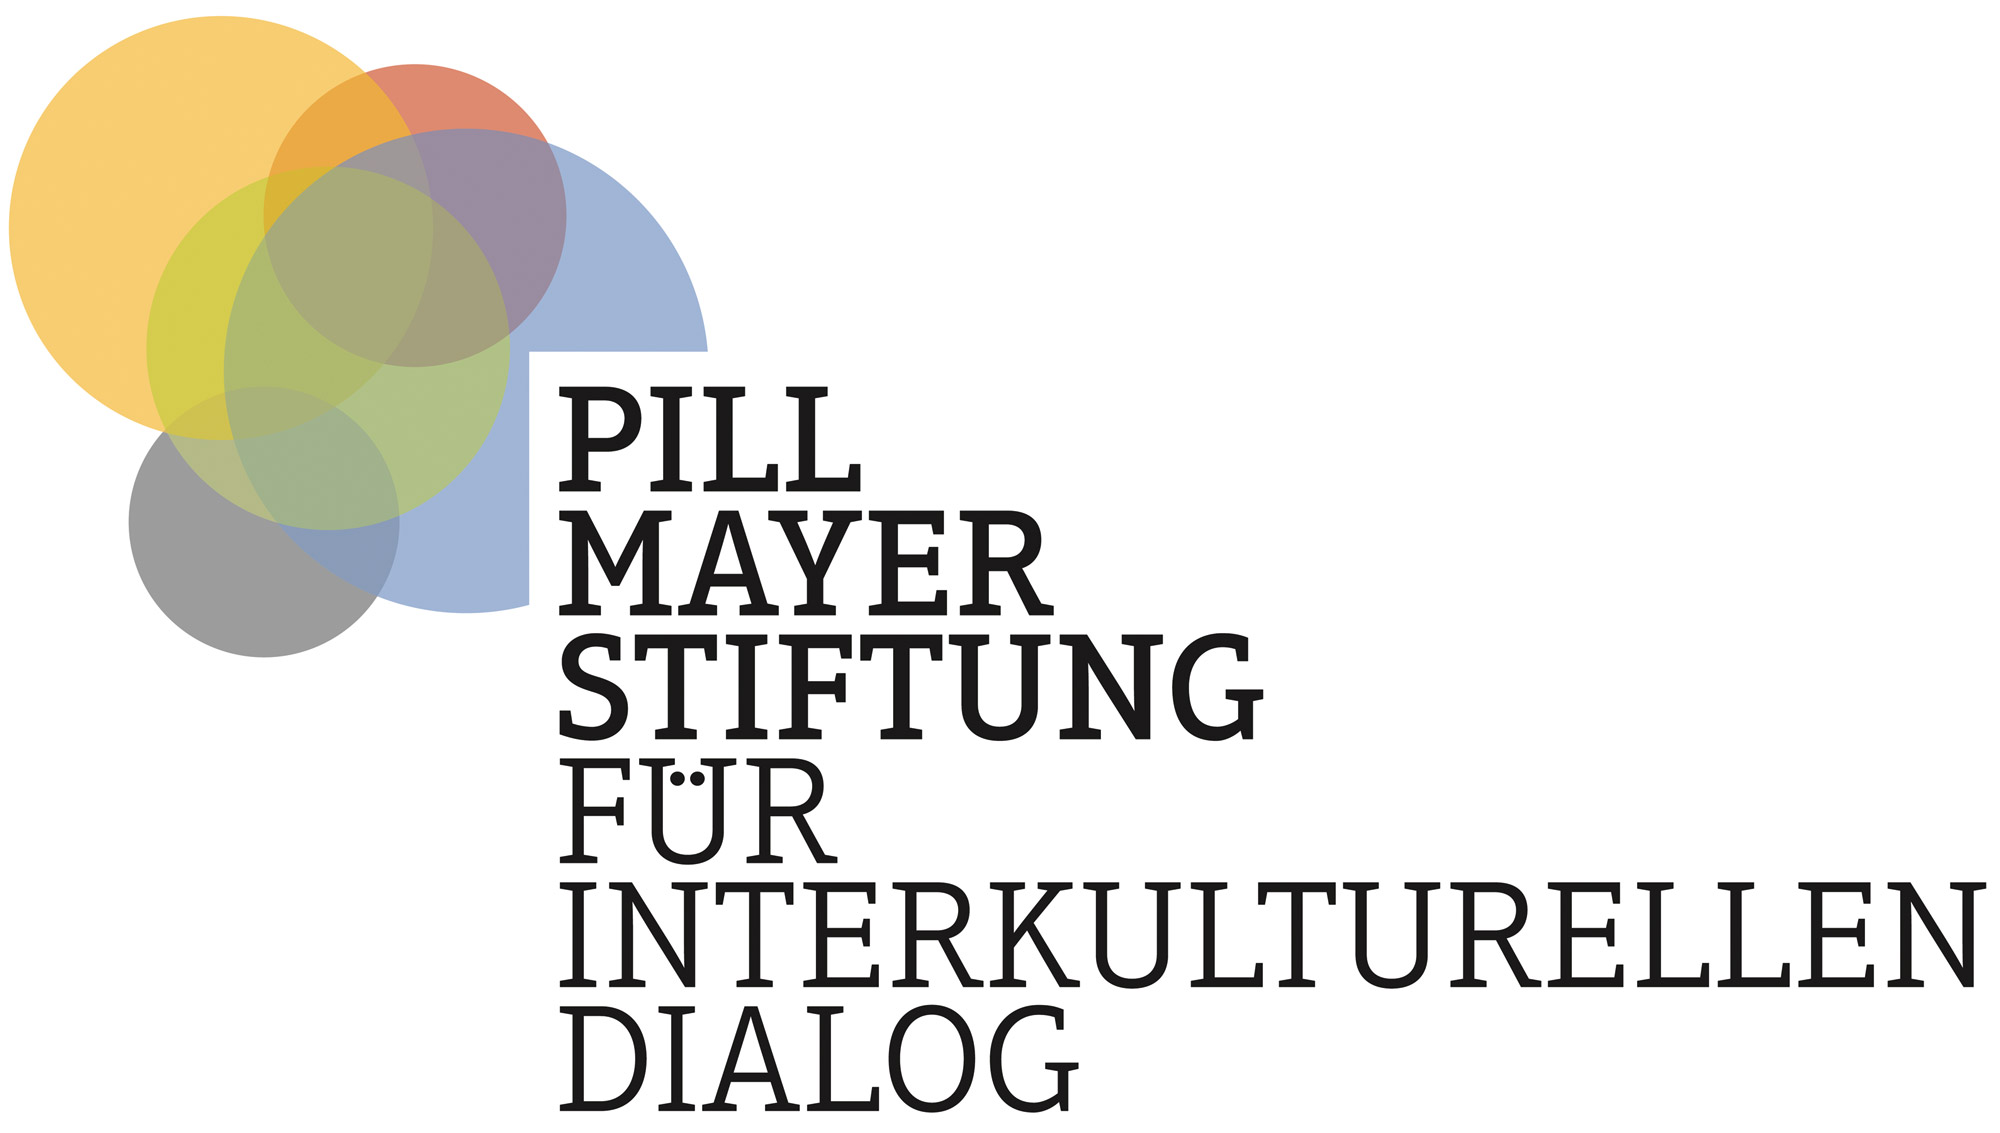 PILL MAYER STIFTUNG FÜR INTERKULTURELLEN DIALOG